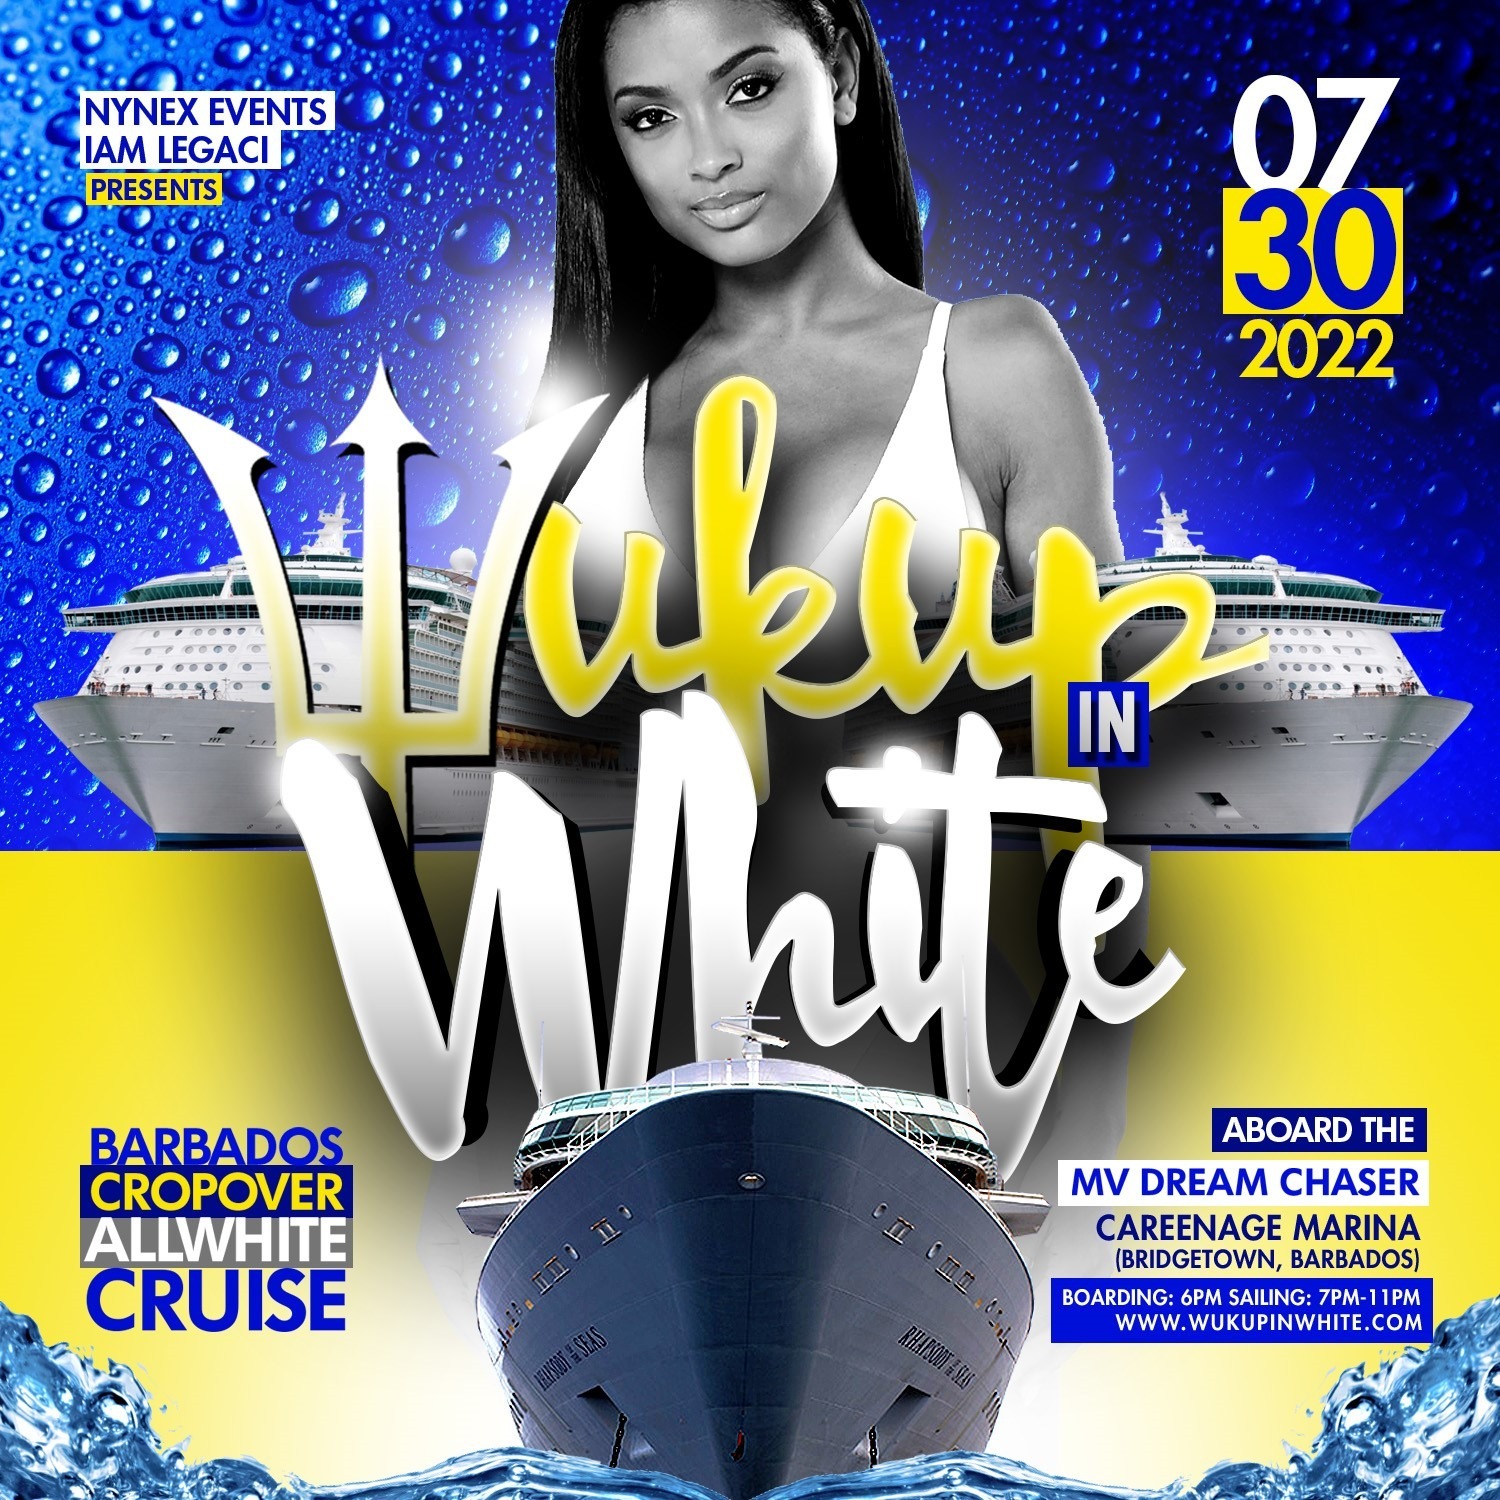 WUK UP IN WHITE The Annual All White Boat Ride · Barbados Cropover 2022 